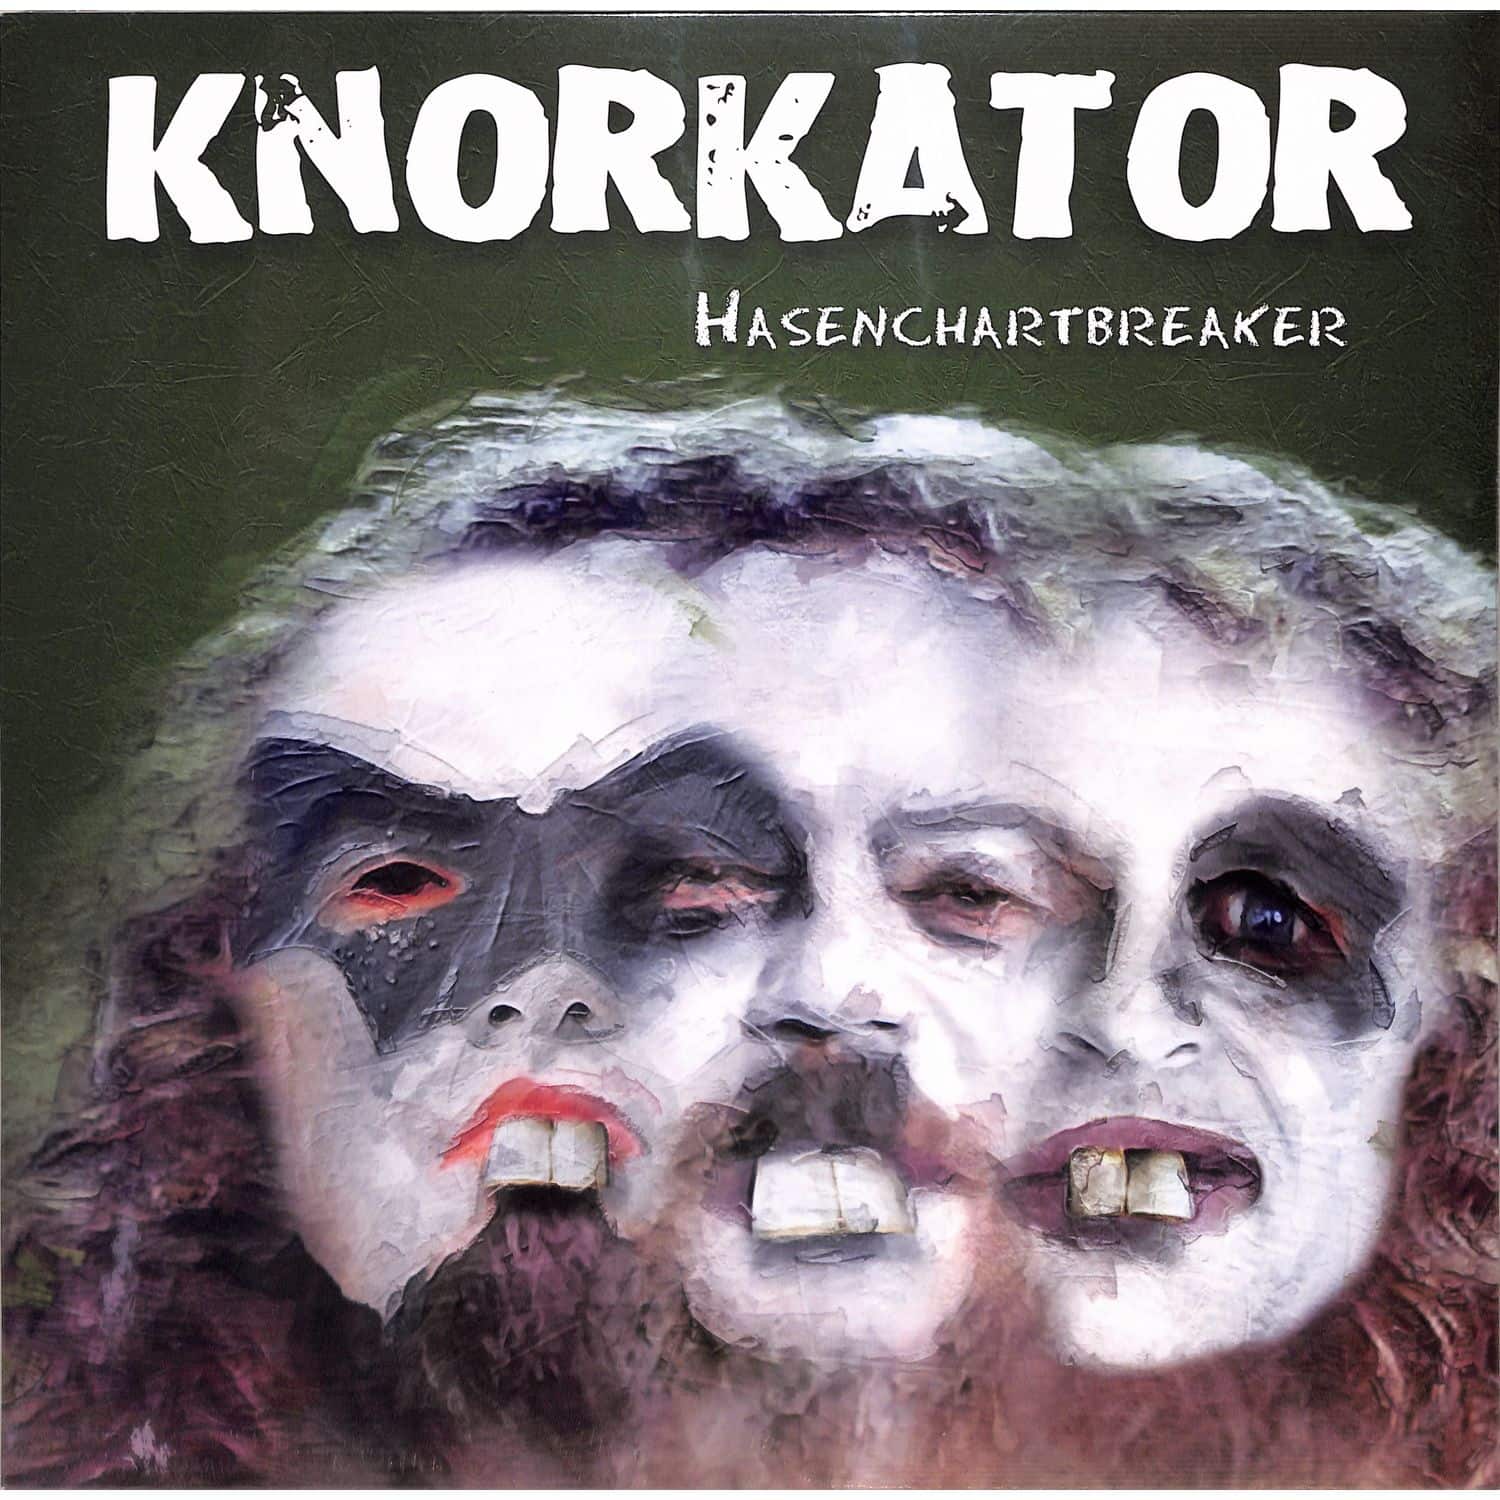 Knorkator - HASENCHARTBREAKER 